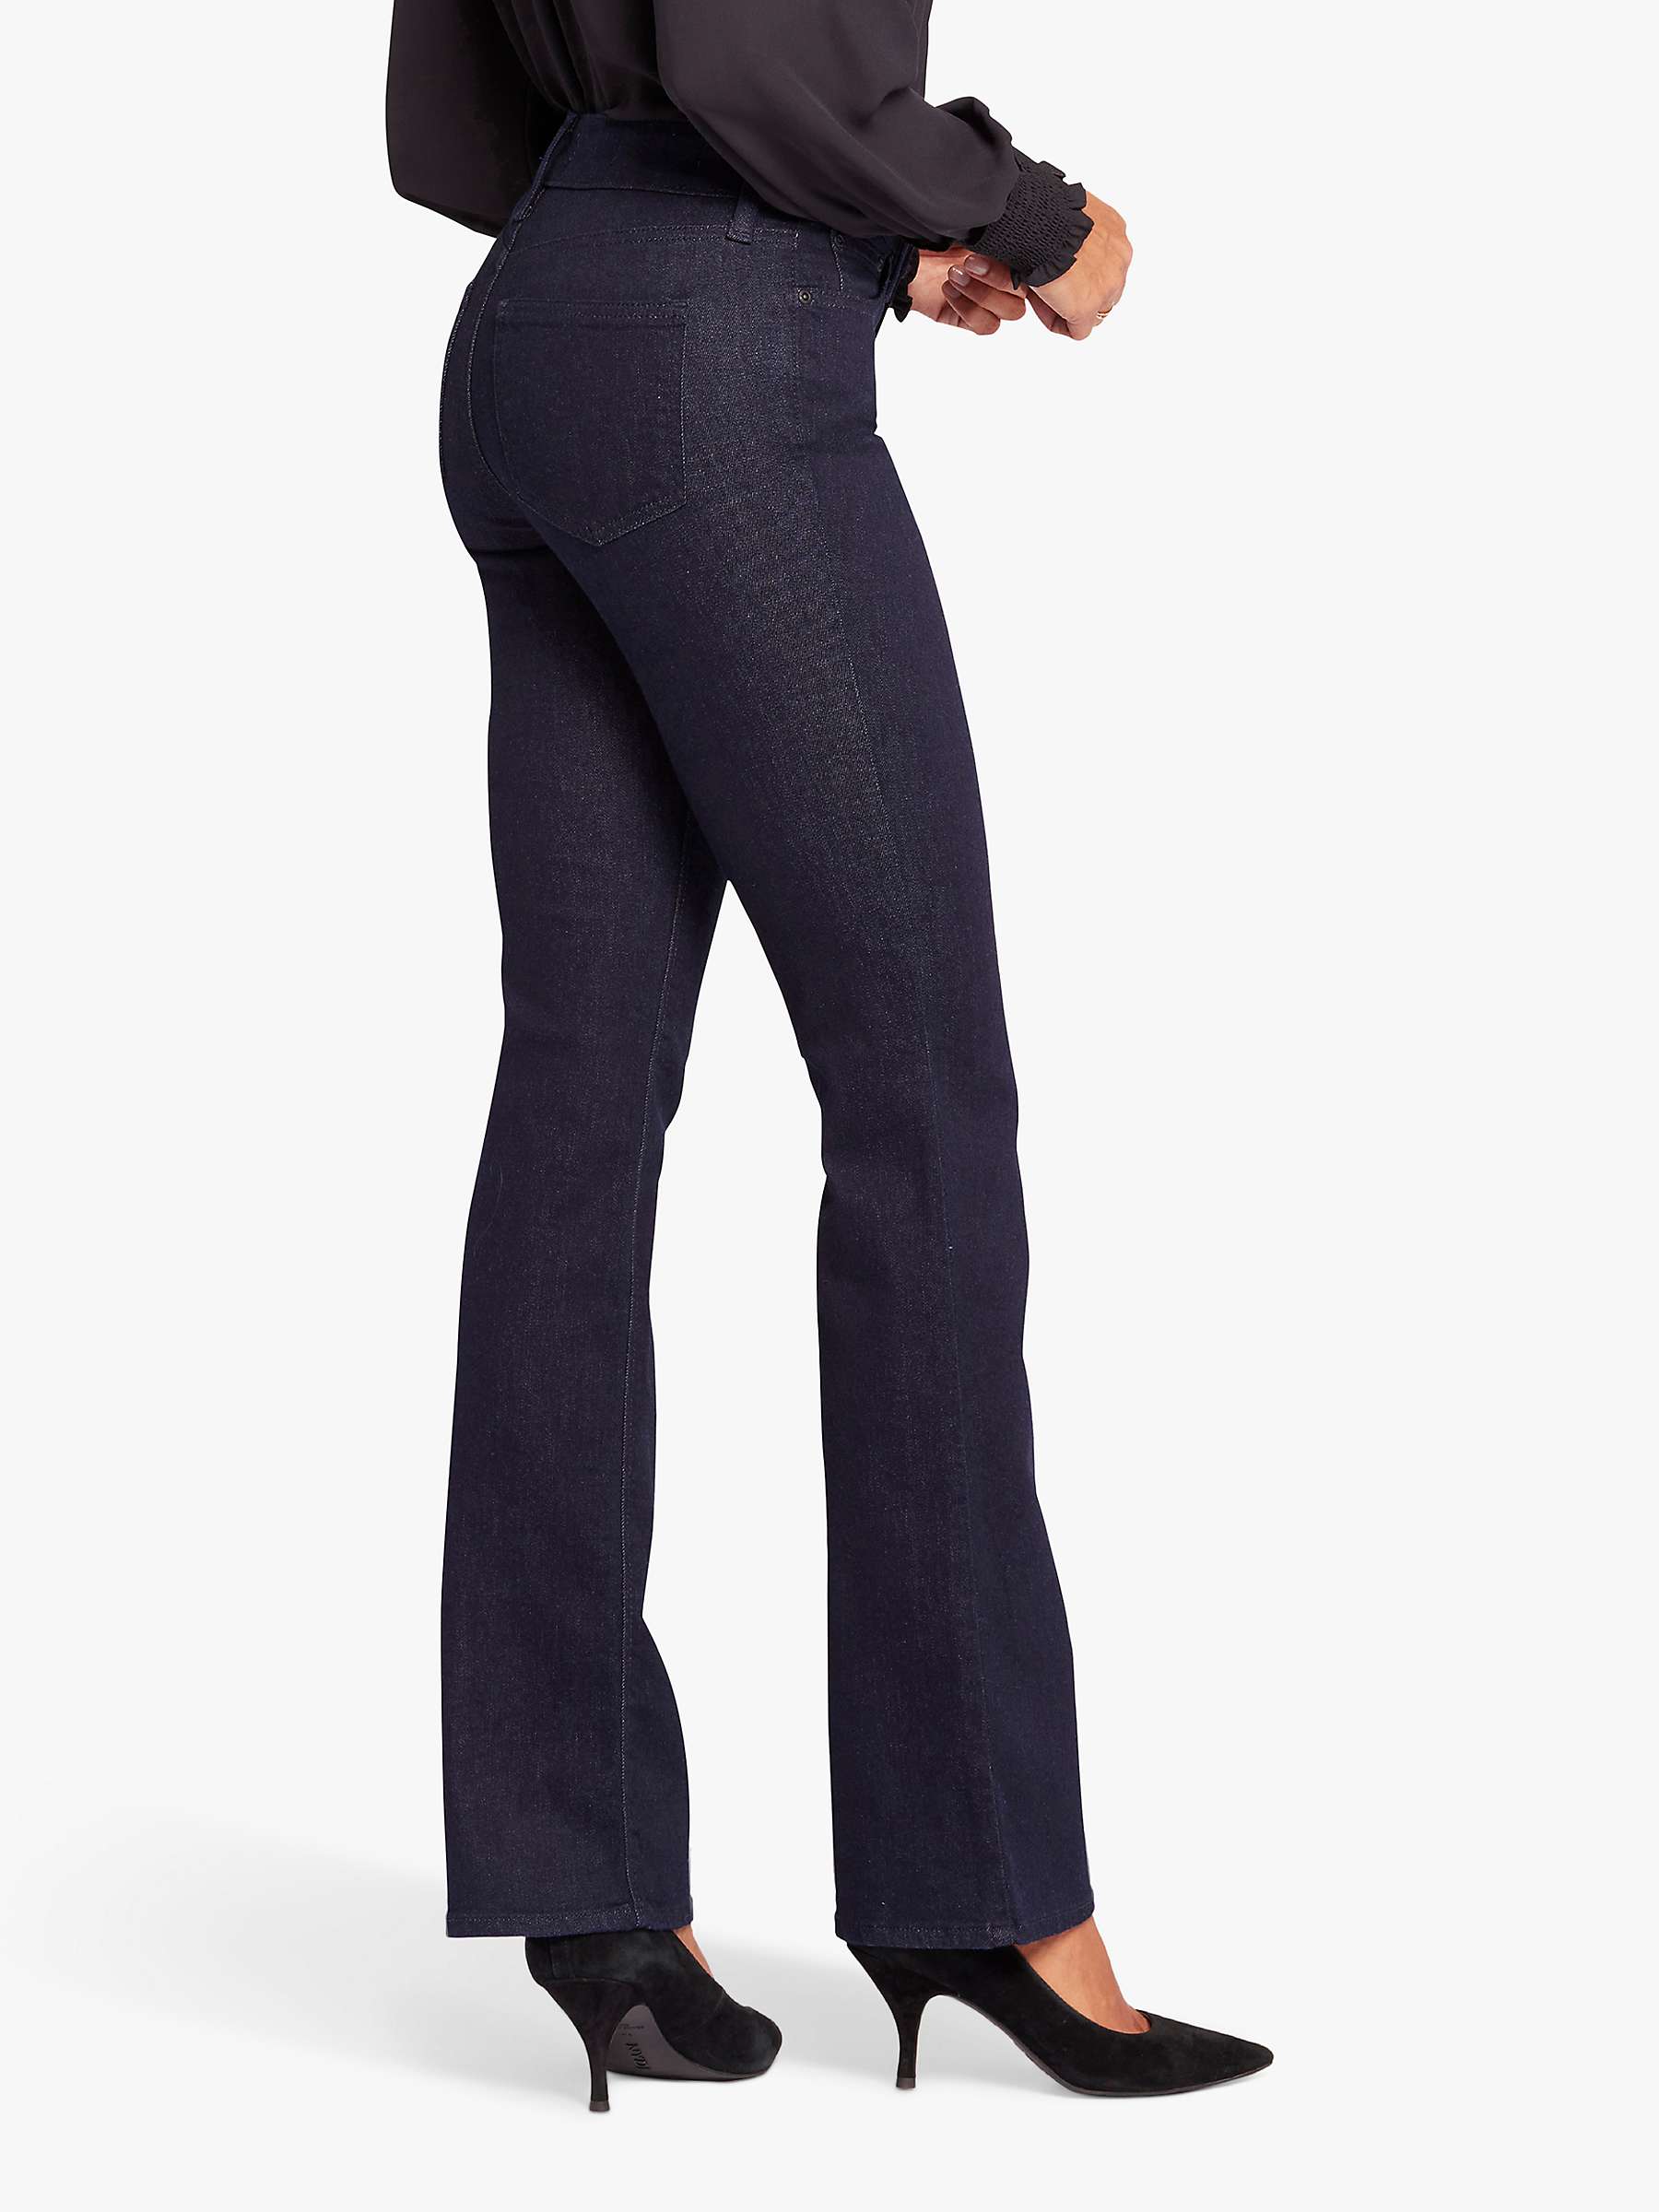 Buy NYDJ Petite Barbara Bootcut Jeans Online at johnlewis.com